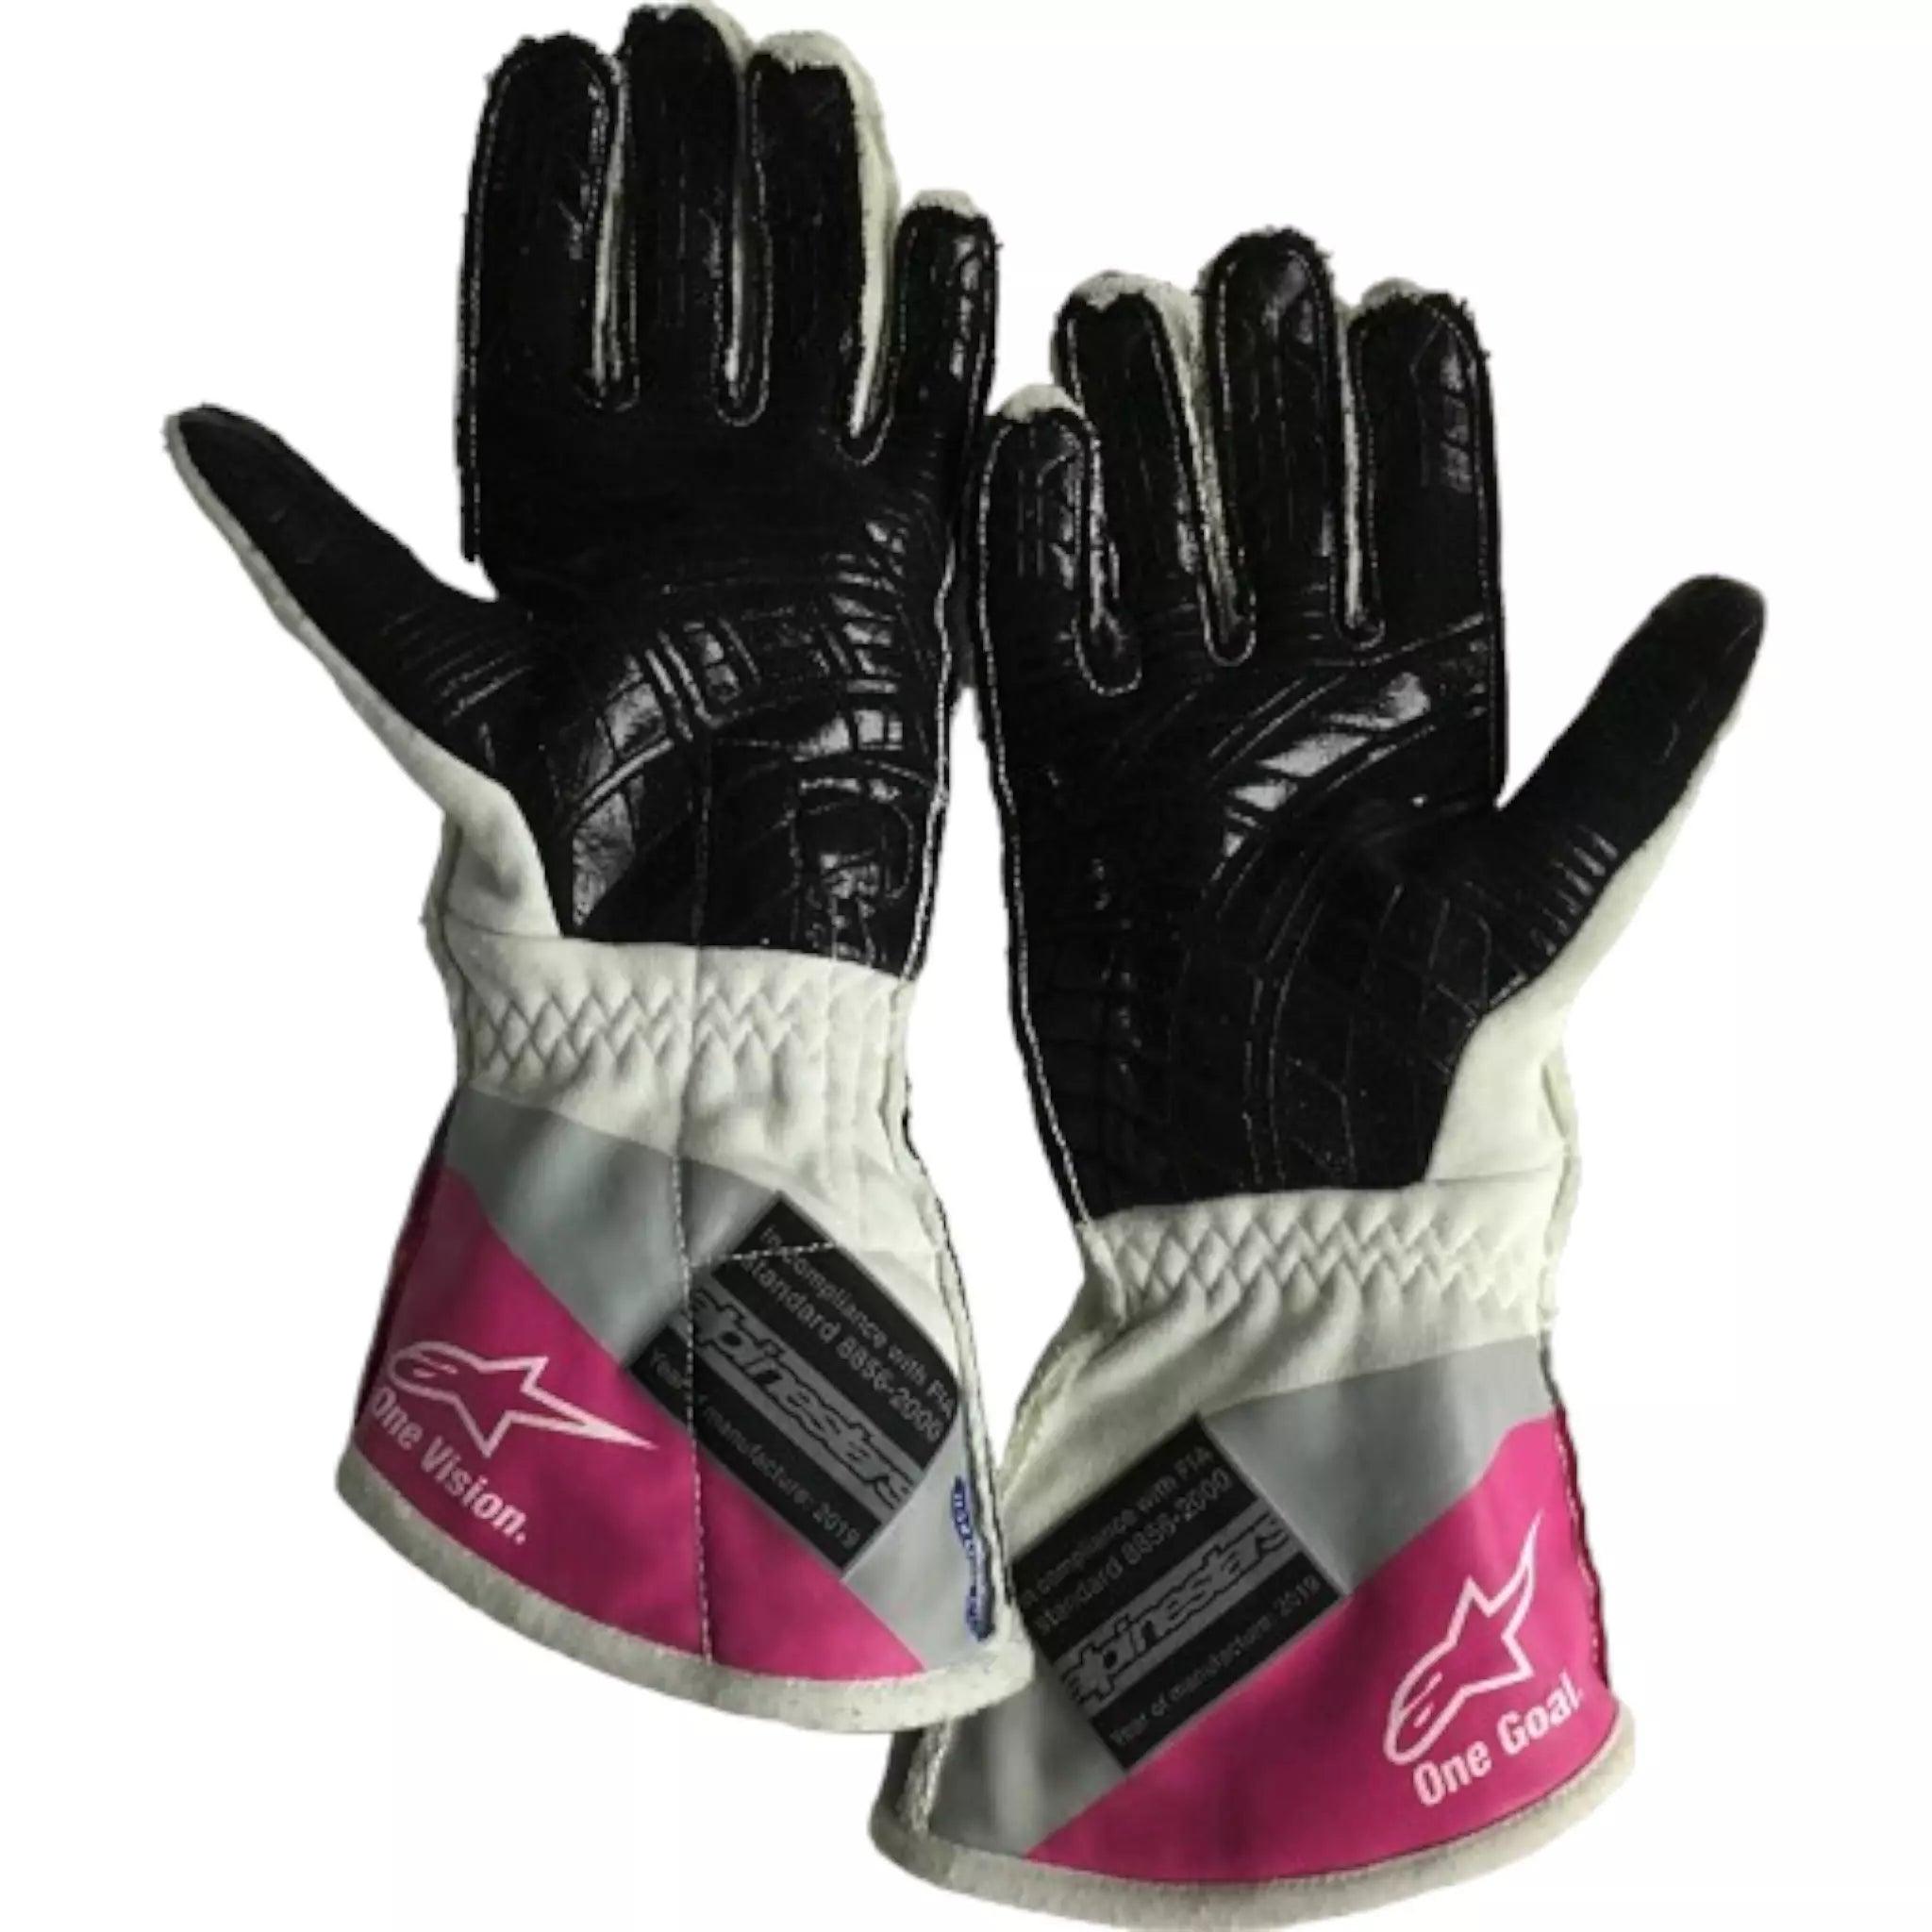 2020 Lance Stroll Racing Gloves F1 Racing Gloves - Dash Racegear 